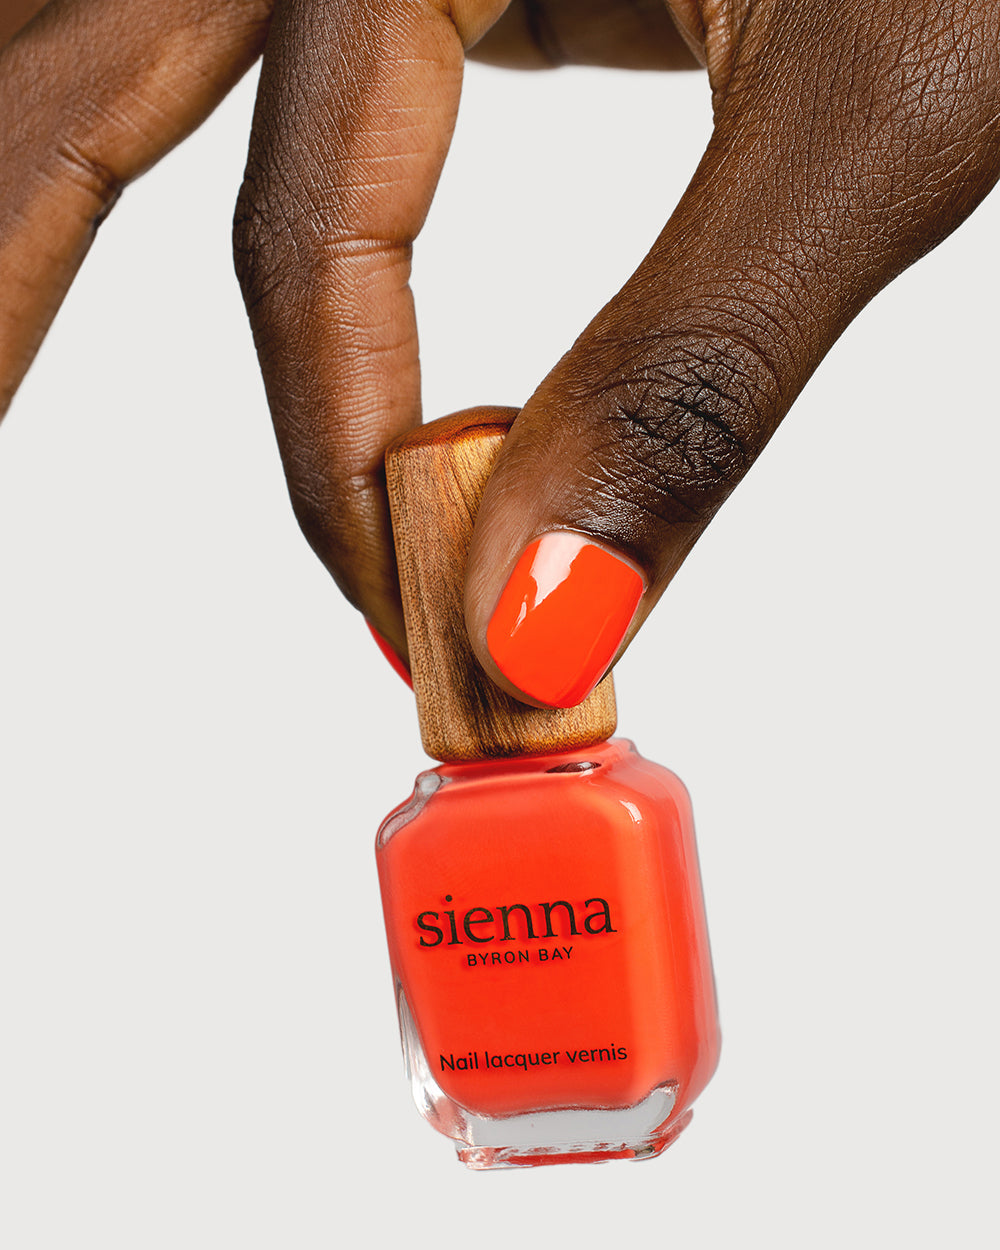 Tangerine nail polish hand swatch on dark skin tone holding sienna bottle